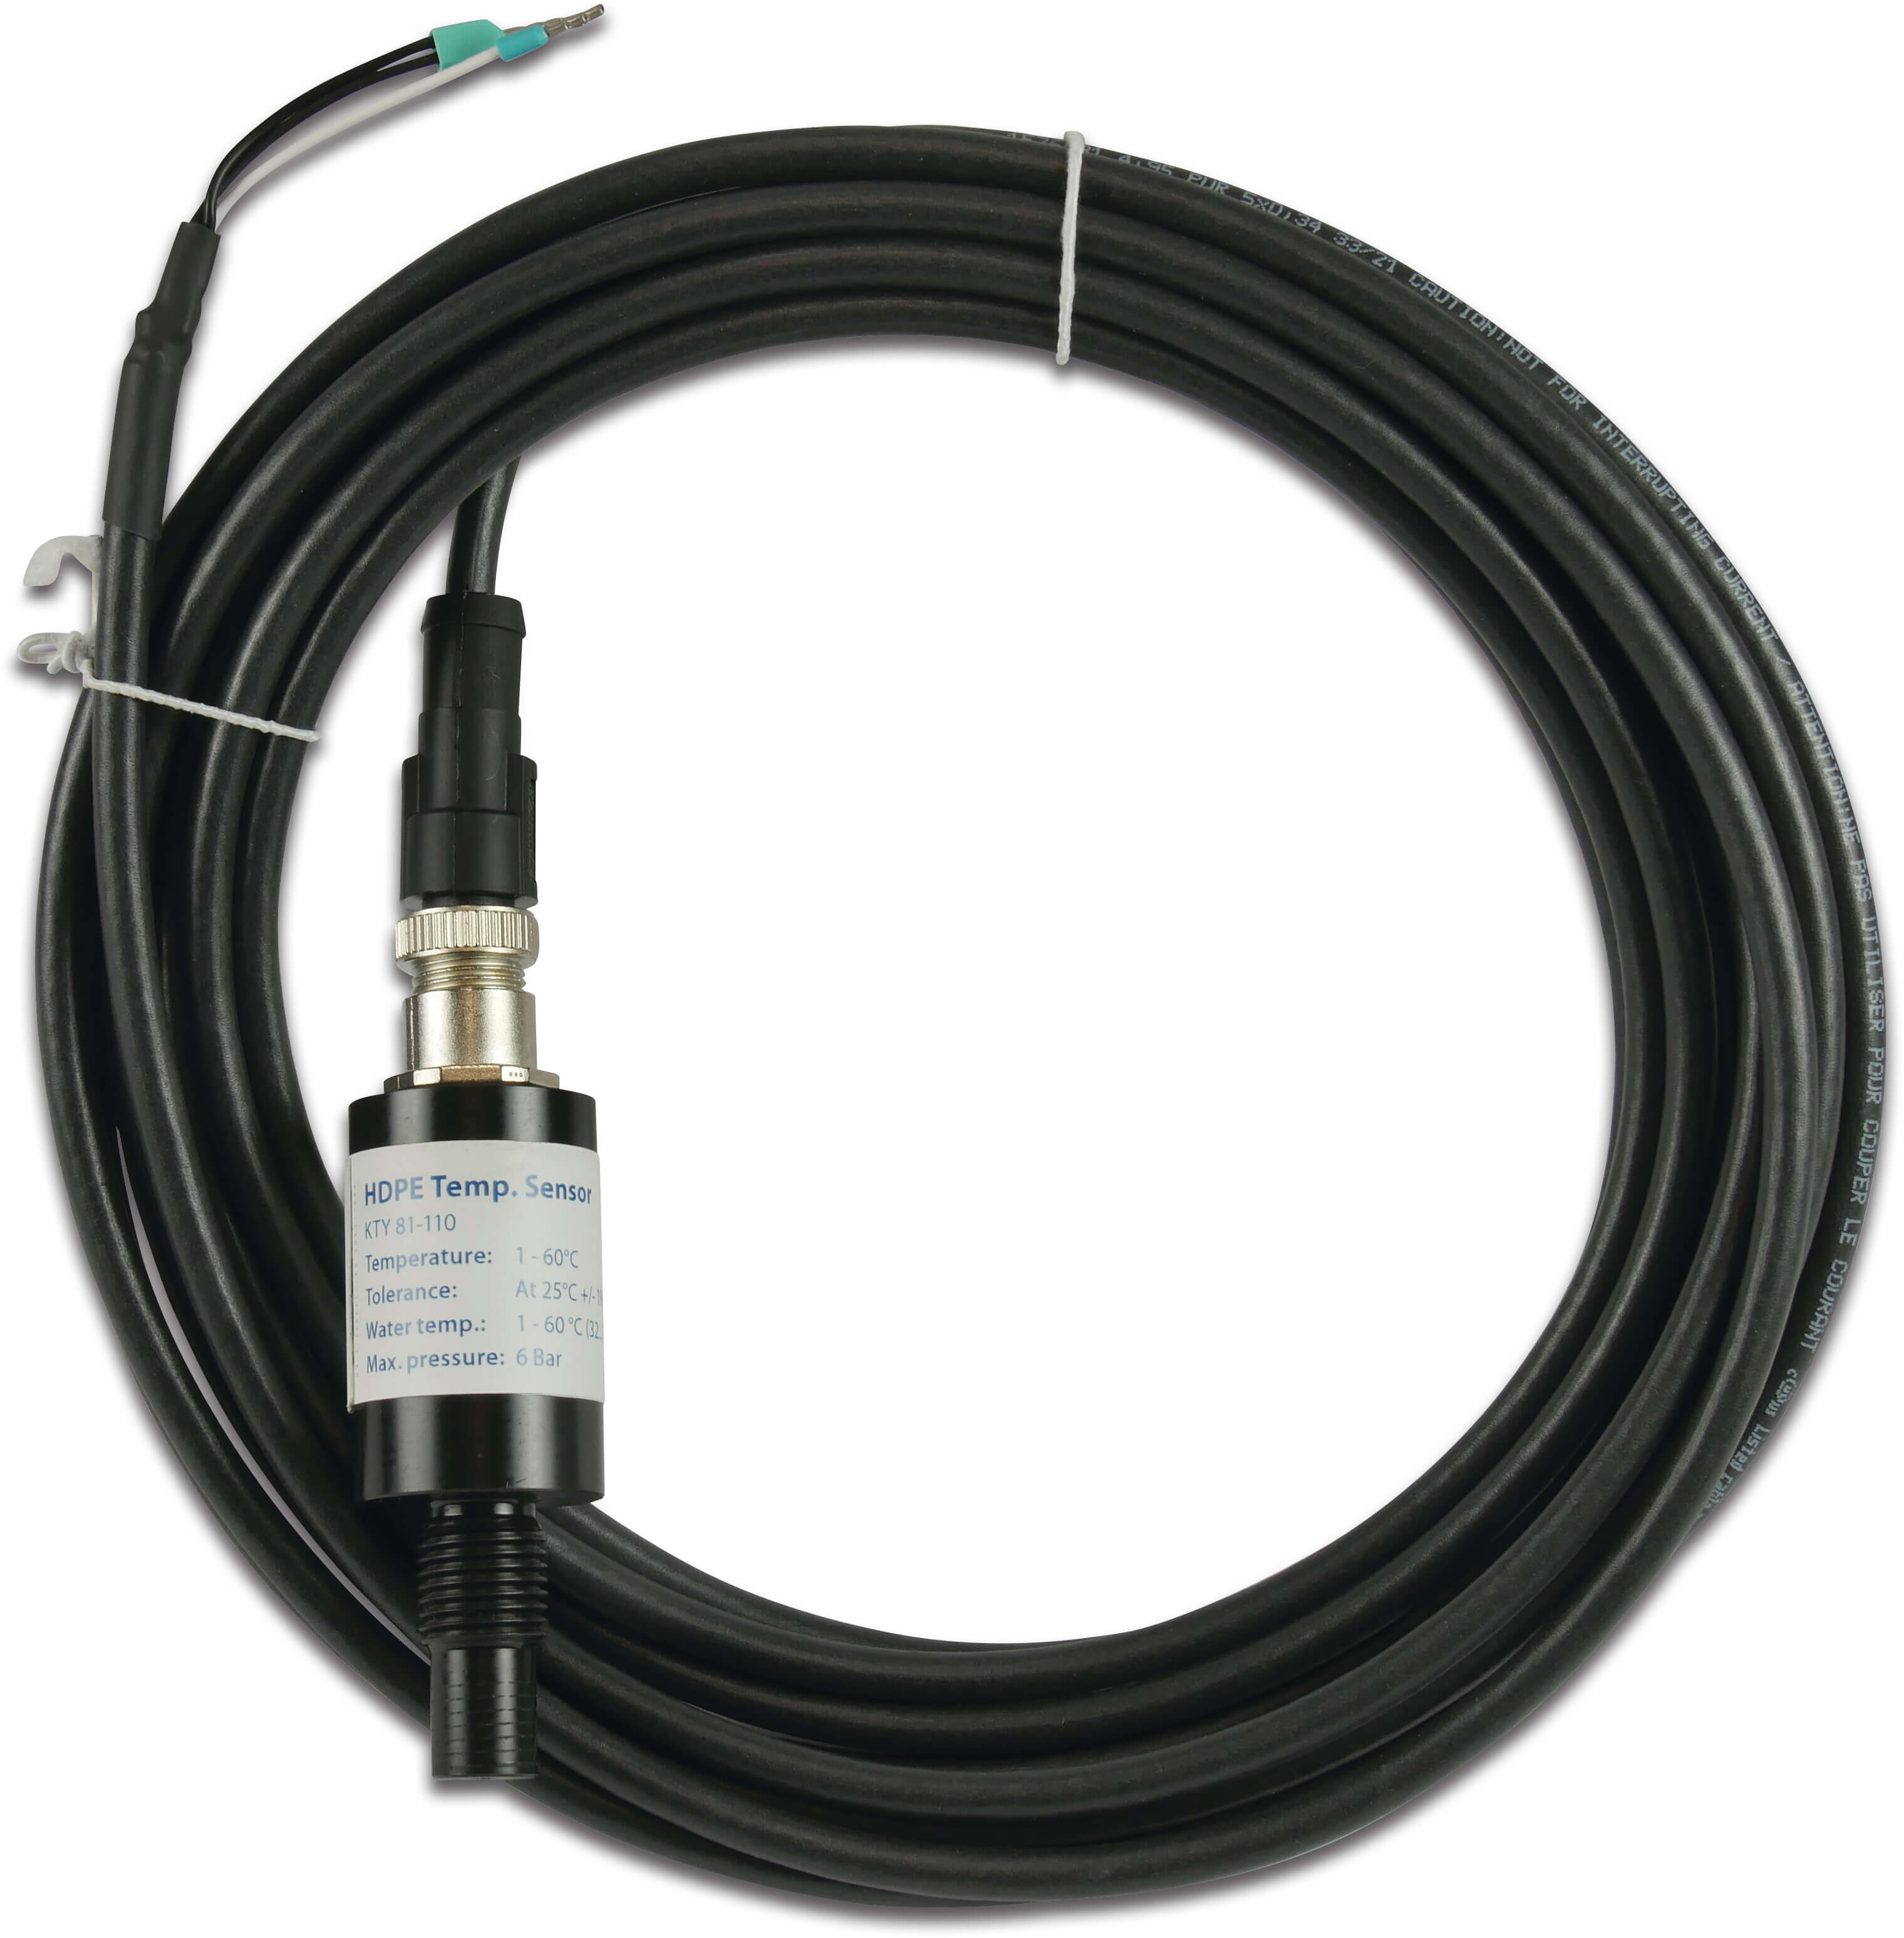 VGE Pro Temperature sensor 5 meter cable